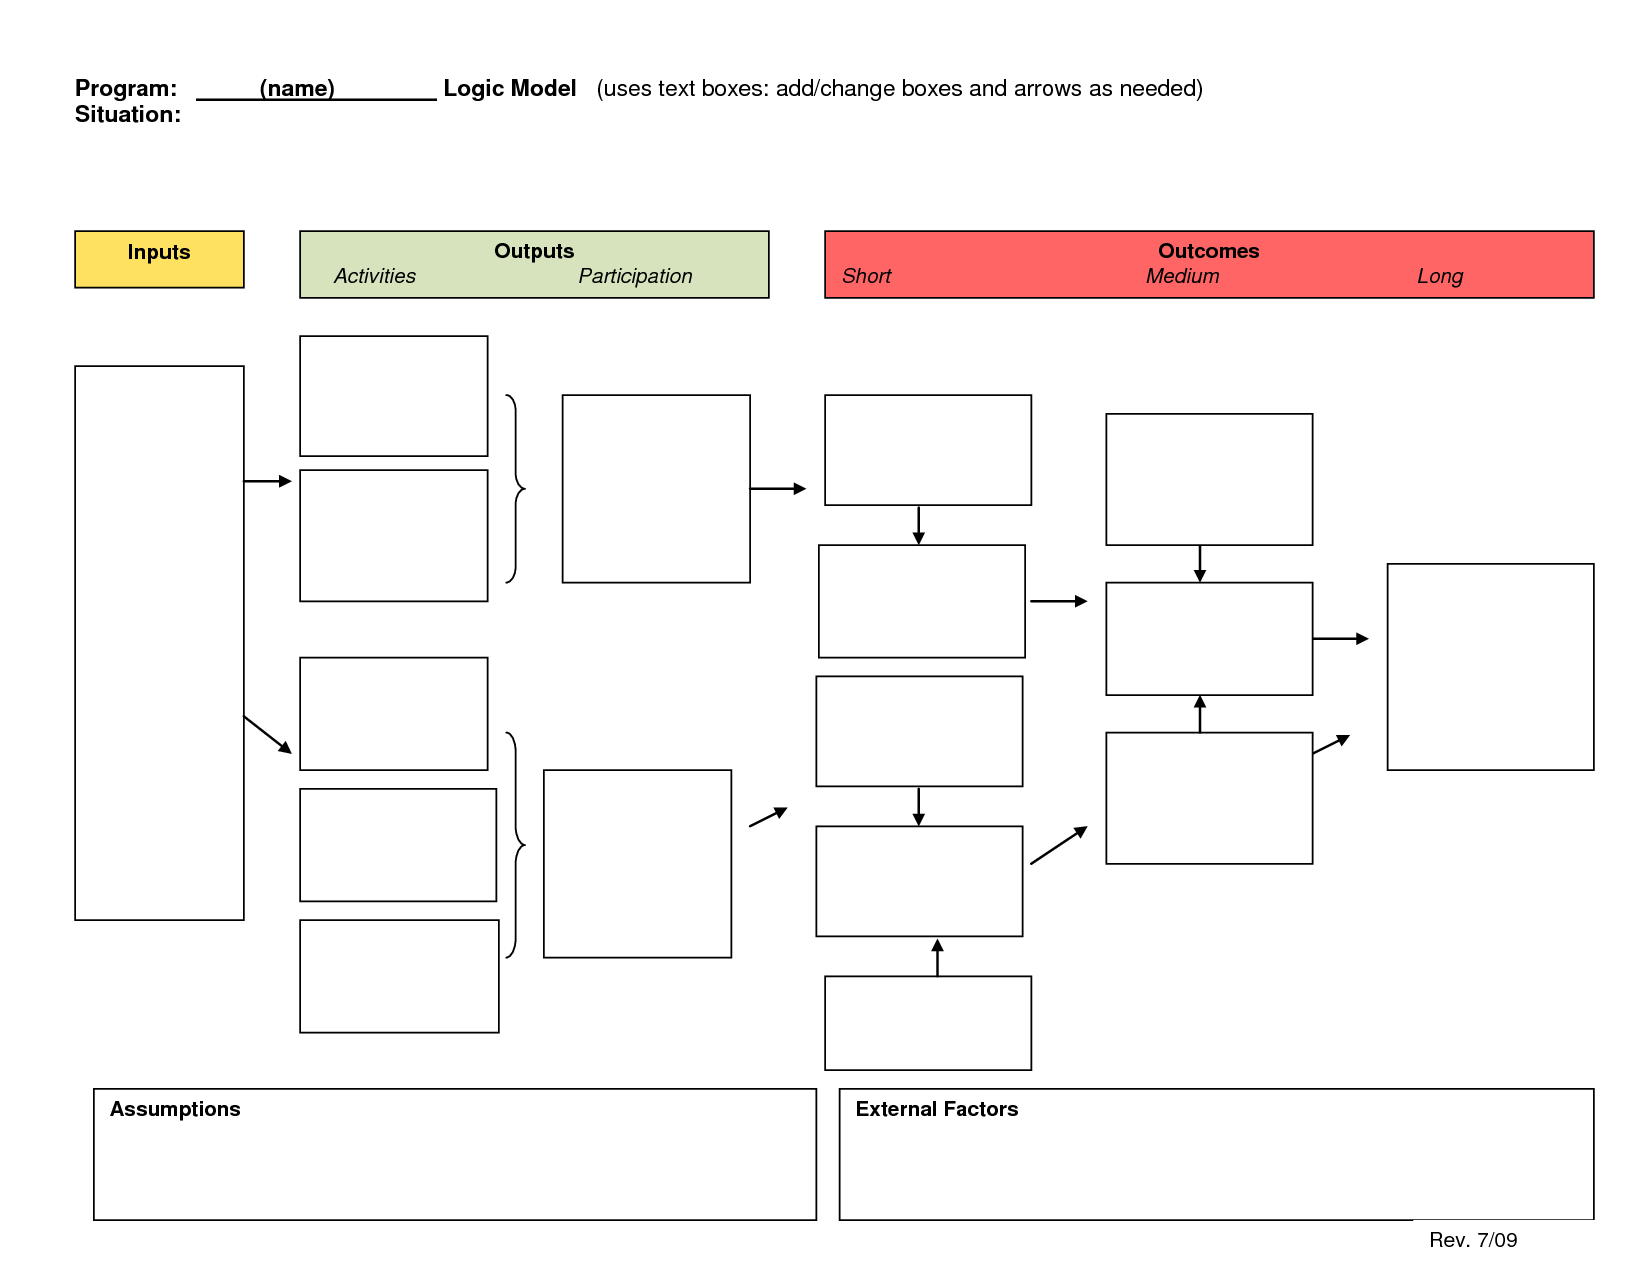 Logic Model Template | E Commercewordpress With Regard To Logic Model Template Microsoft Word